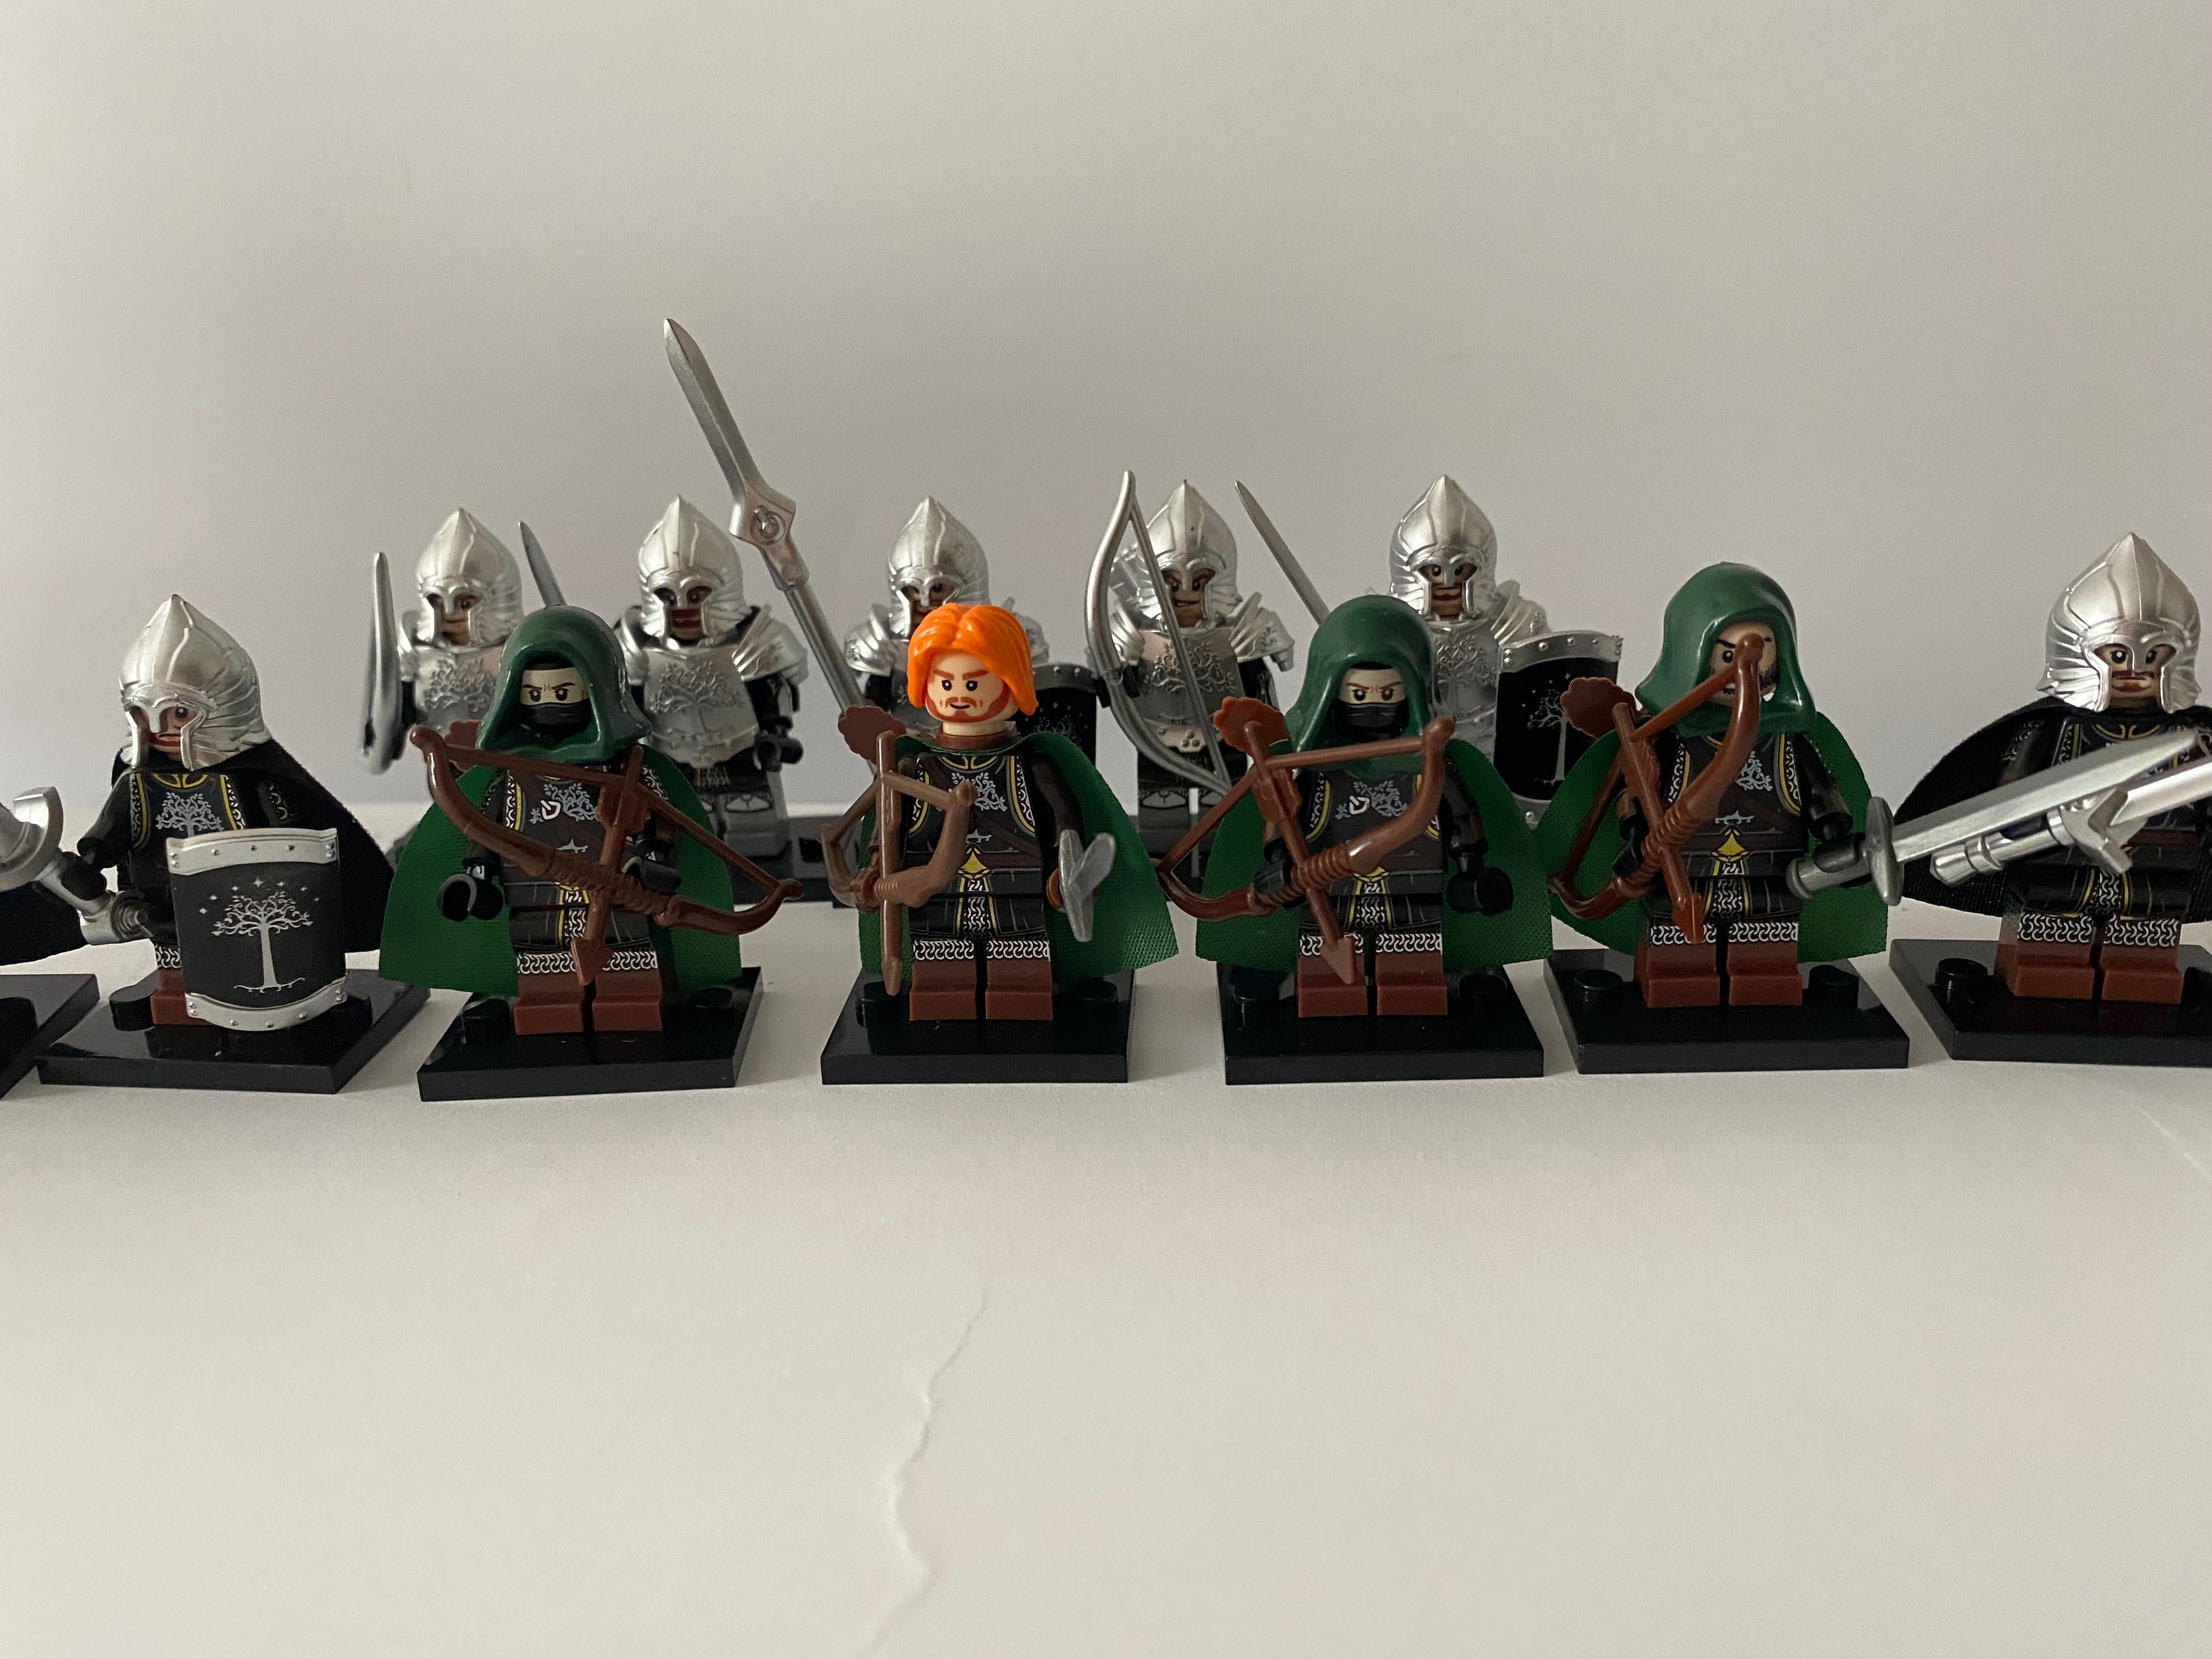 Lego The Lord of the Rings |
Властелин Колец армия Гондора